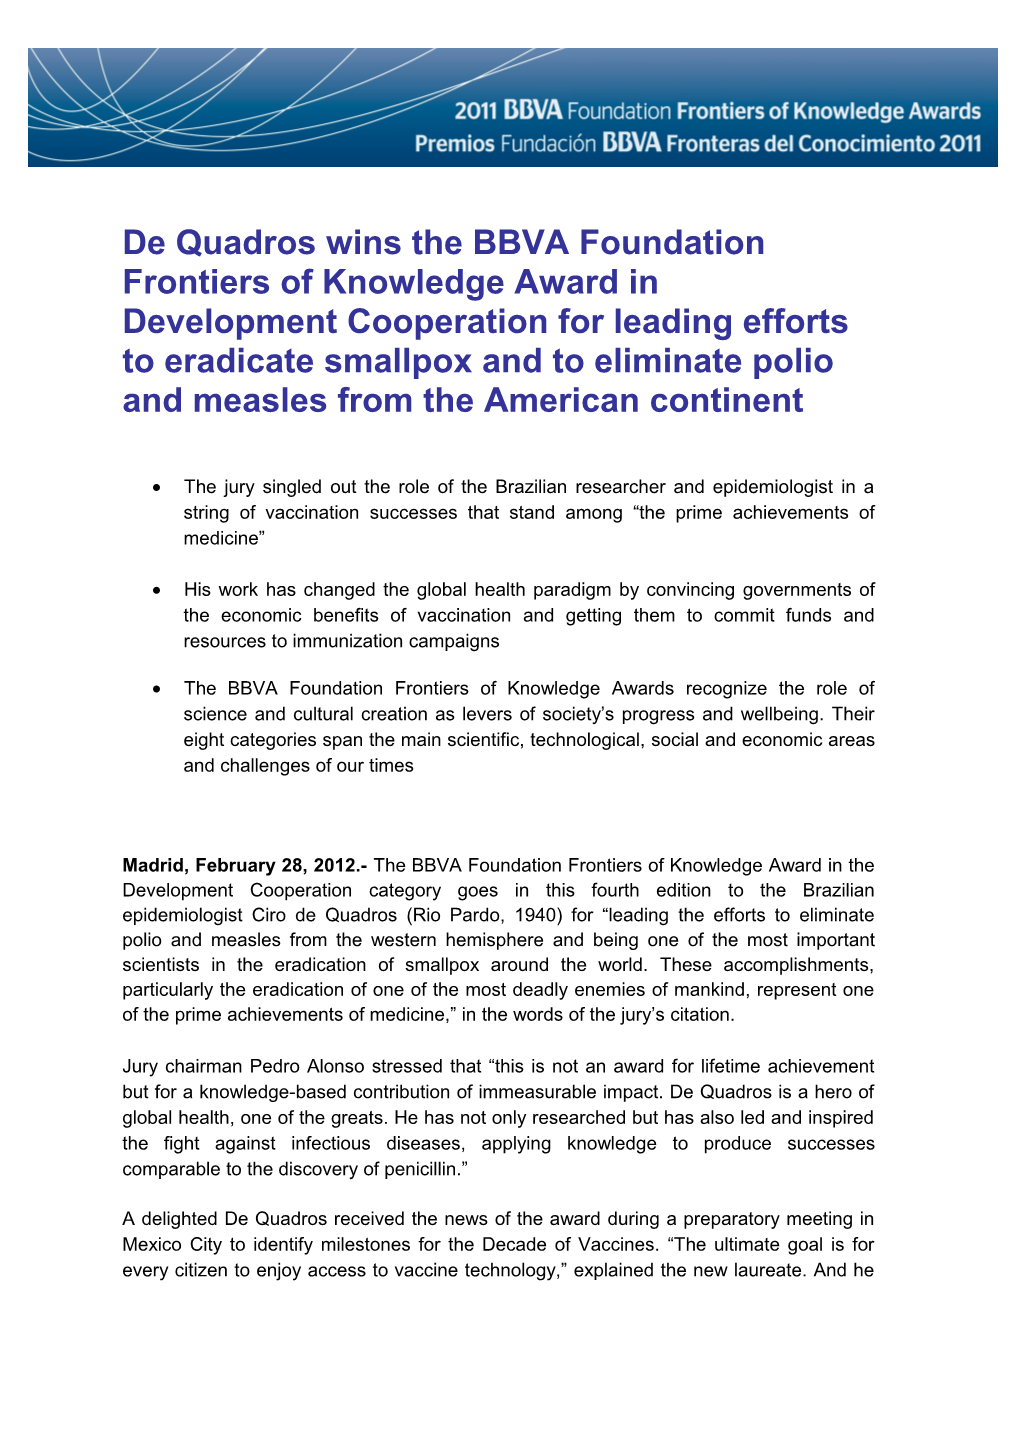 De Quadroswins the BBVA Foundation Frontiers of Knowledge Award in Development Cooperation